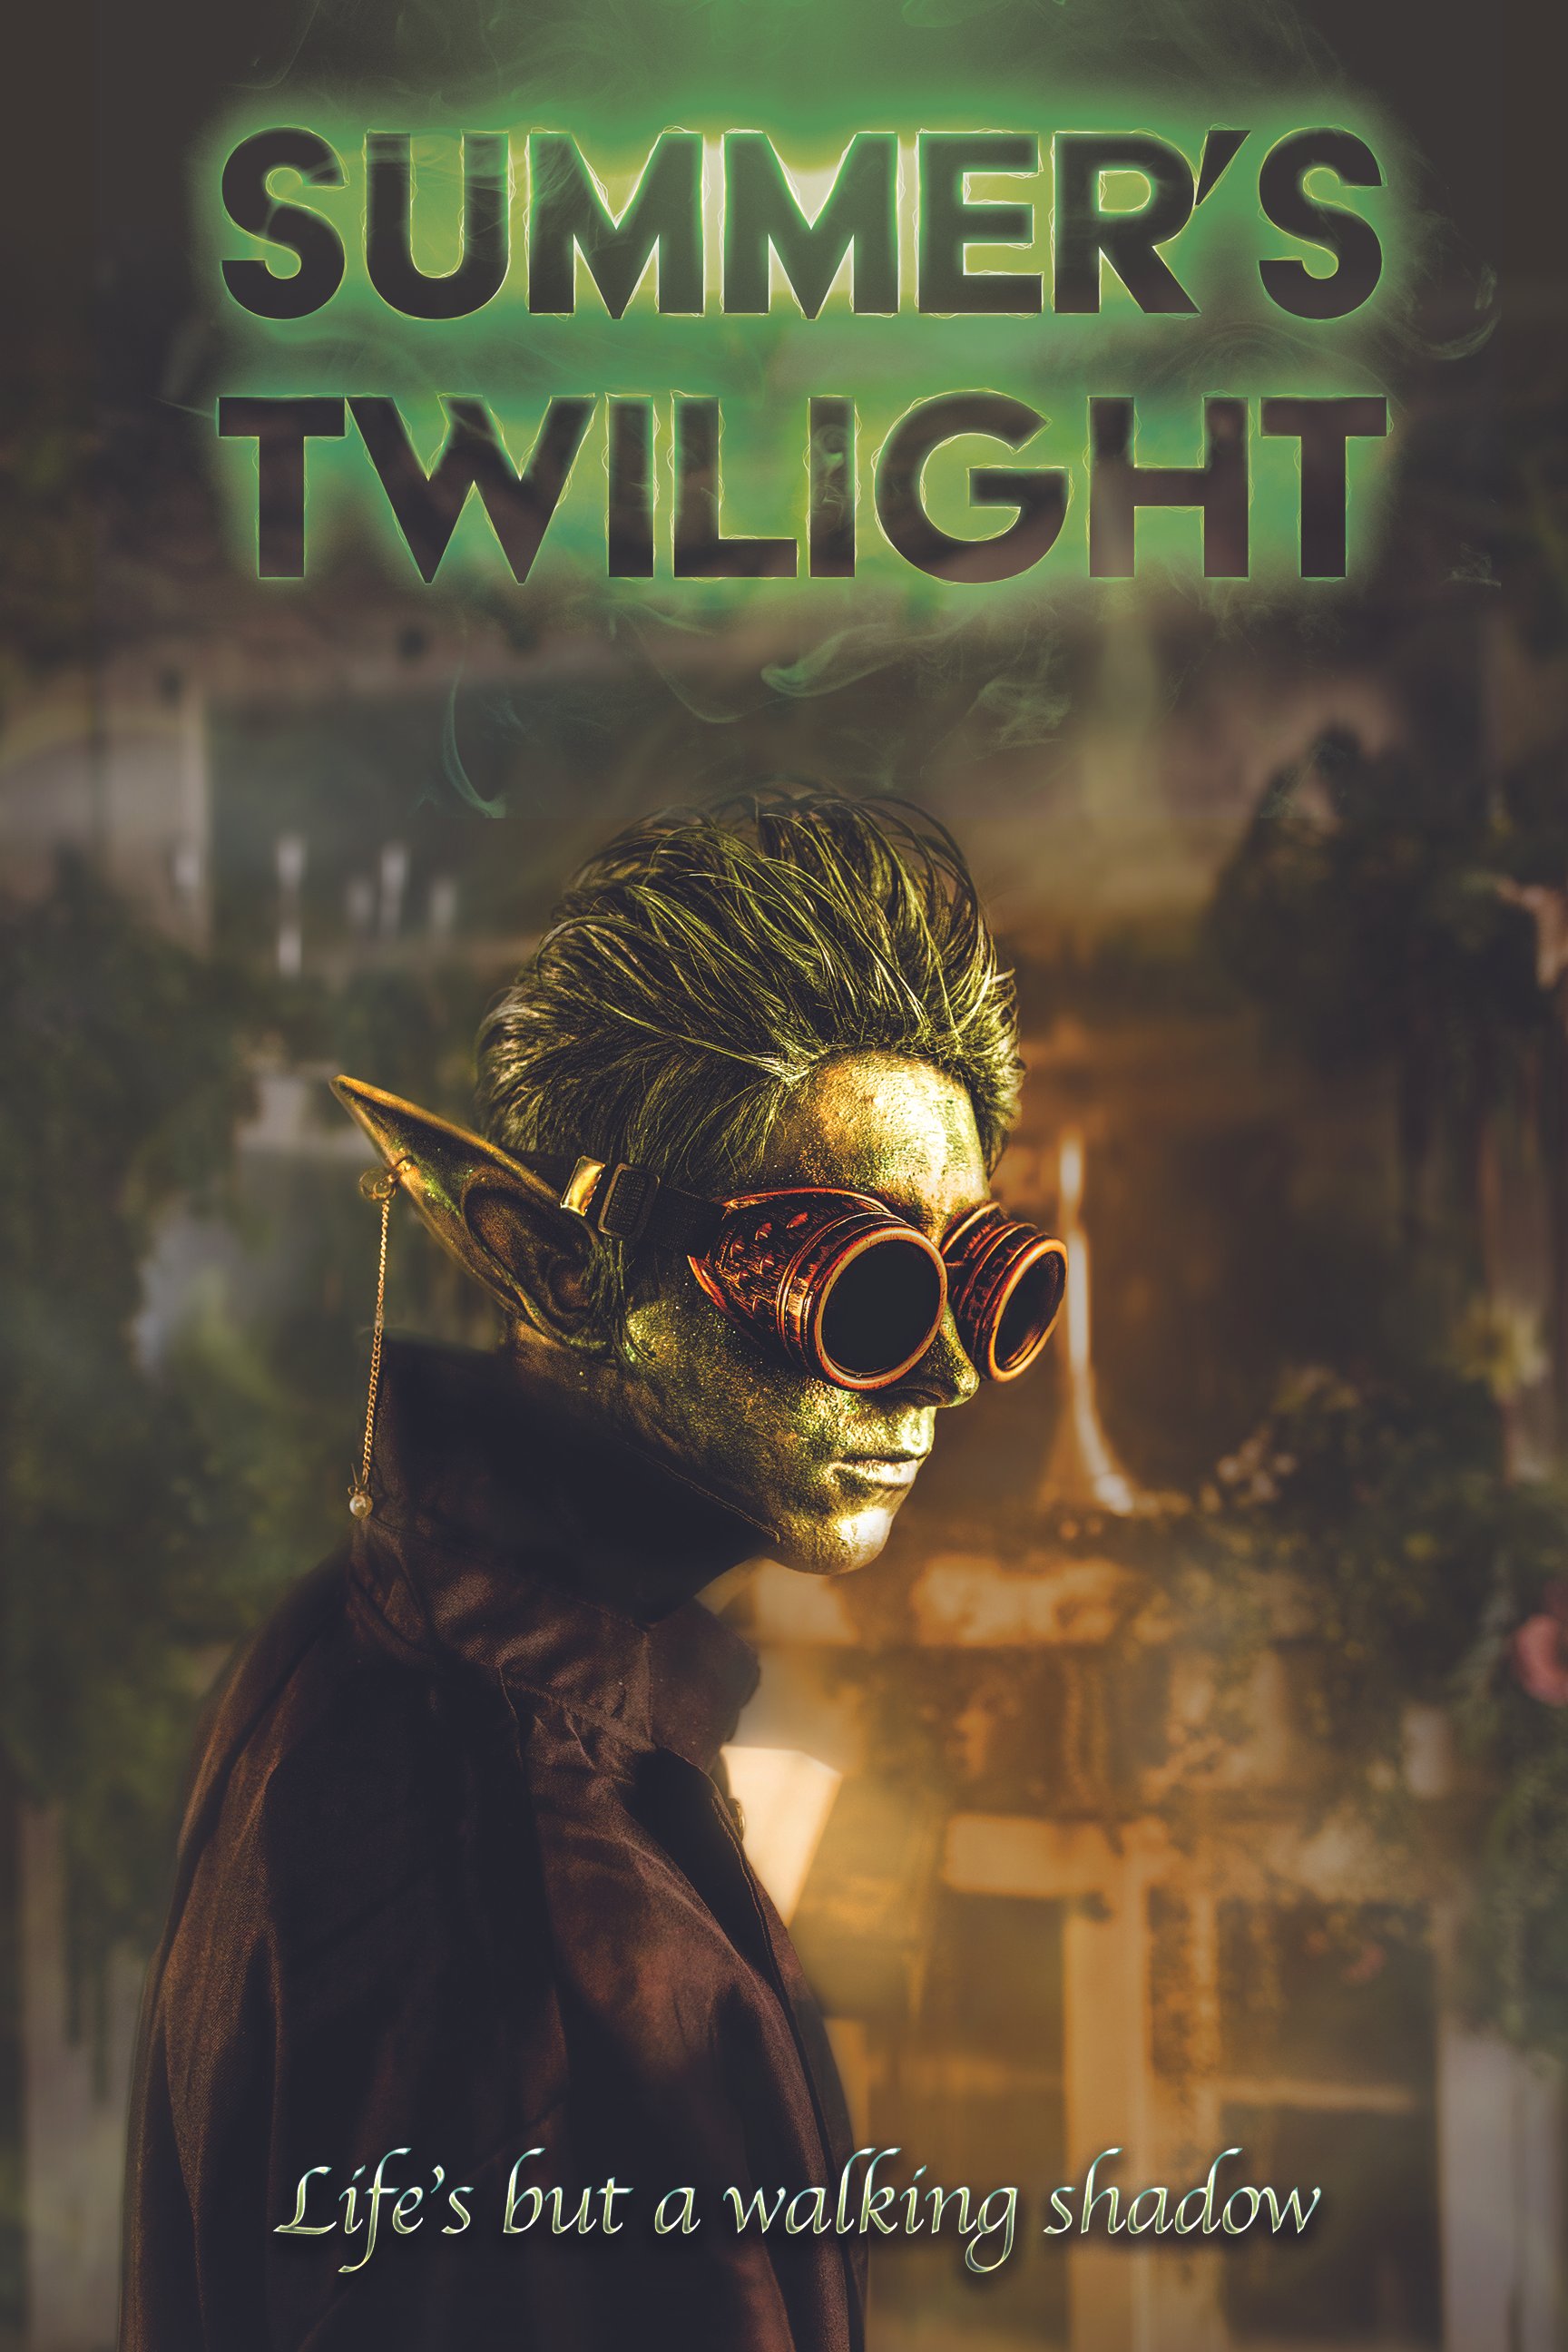 Summers Twilight Poster - Goodfellow copy.jpg